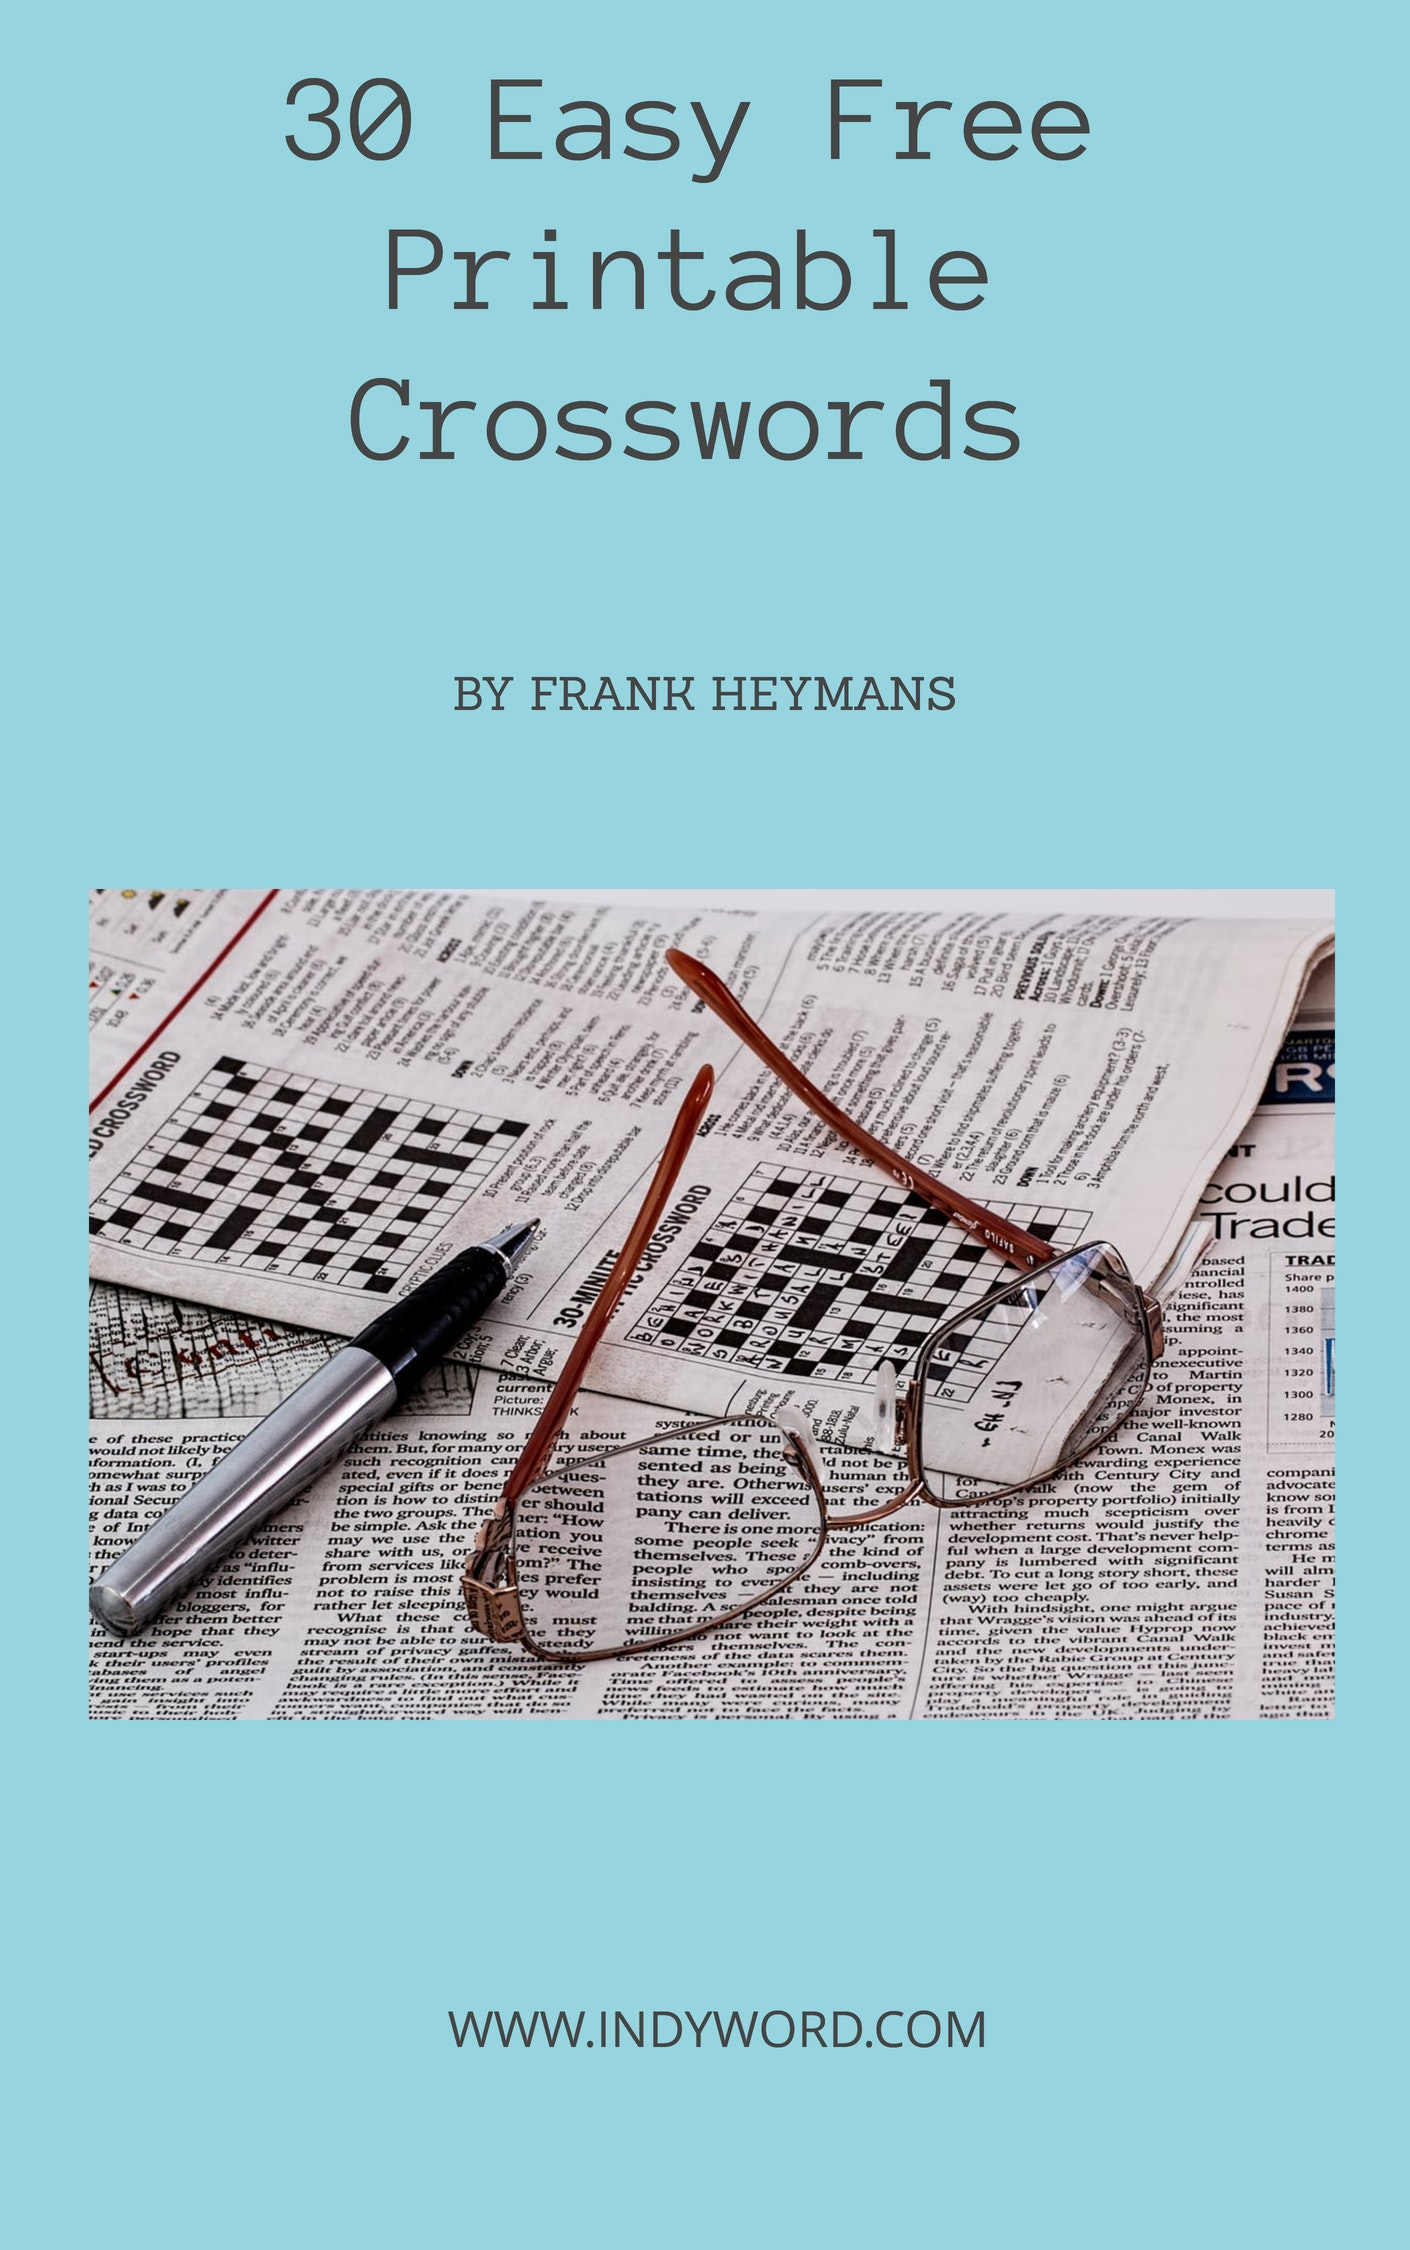 Easy Crossword Puzzles Printable - Printable Crossword Book